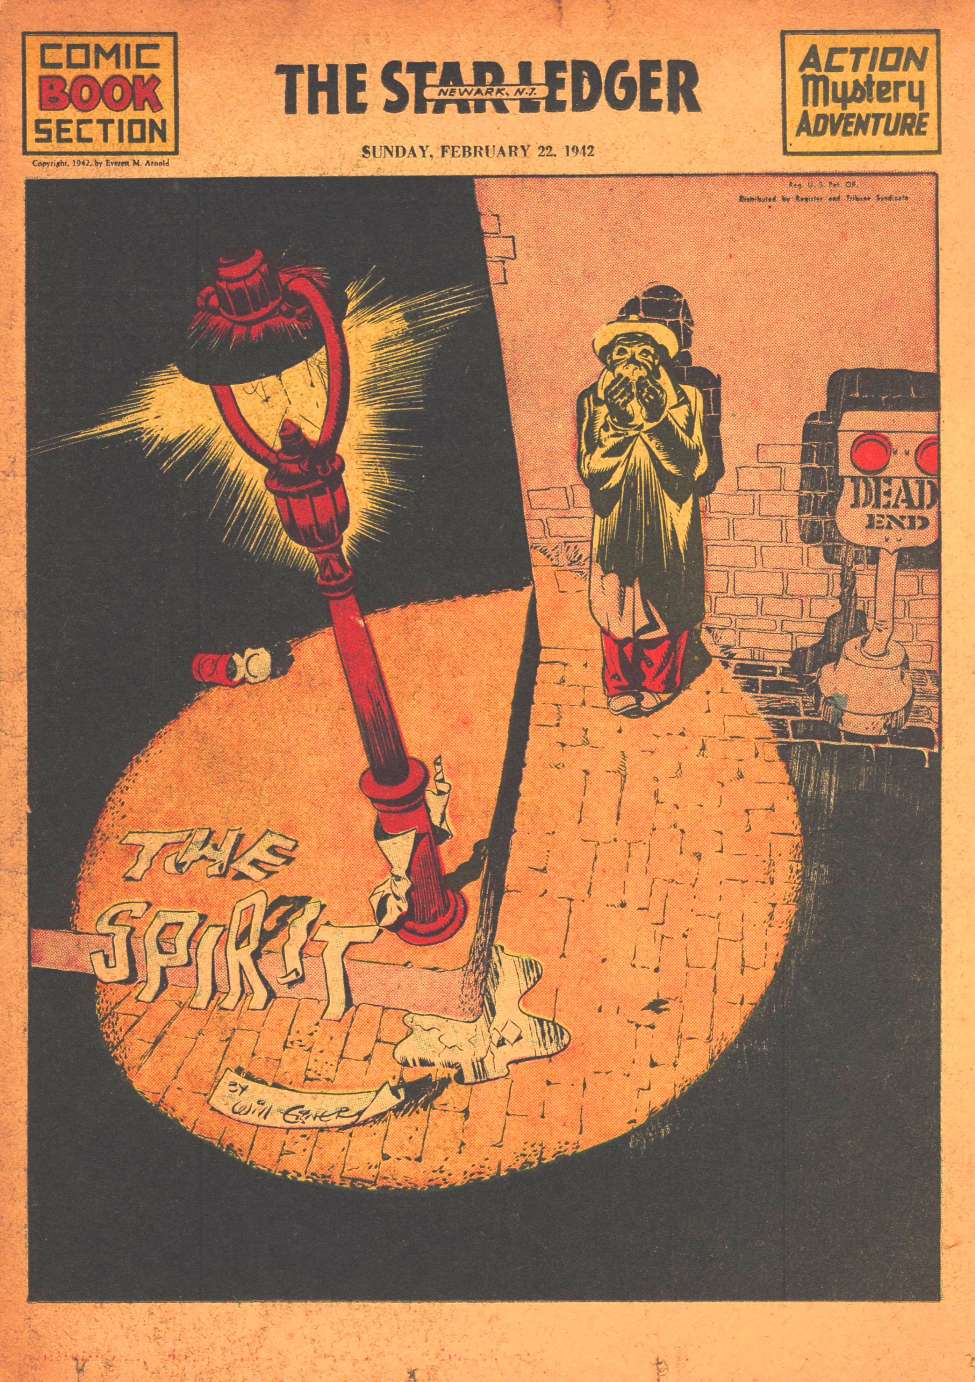 Comic Book Cover For The Spirit (1942-02-22) - Star-Ledger - Version 2